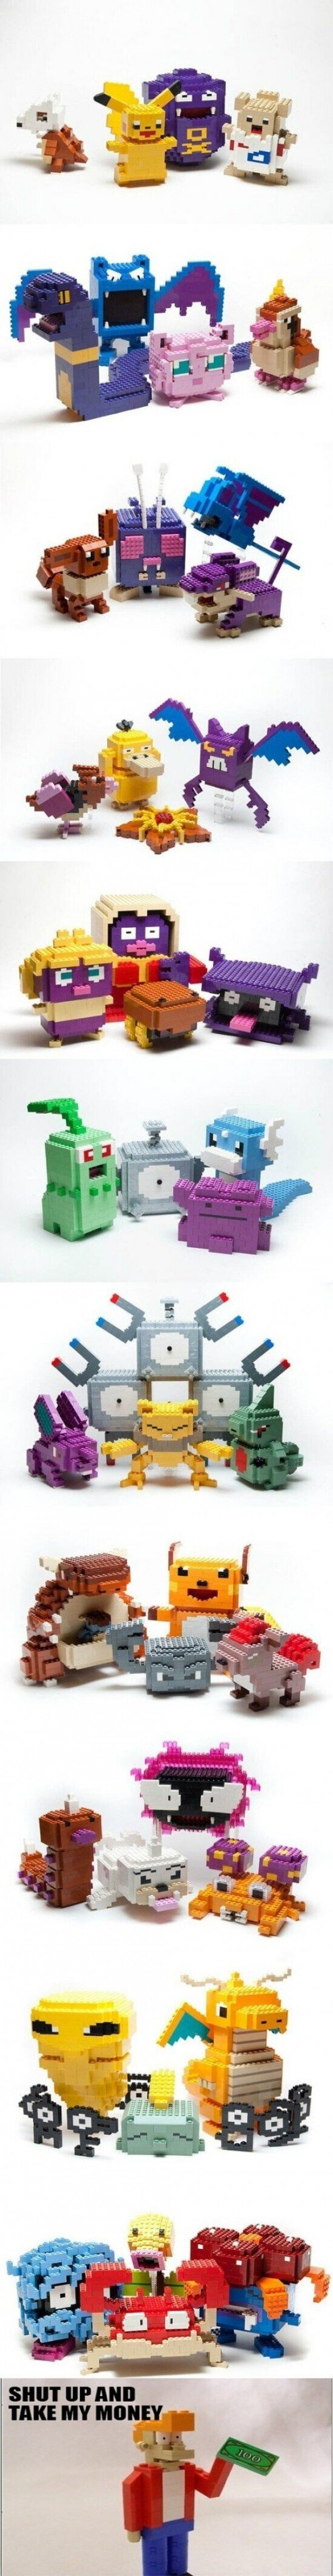 LegoPokémon style